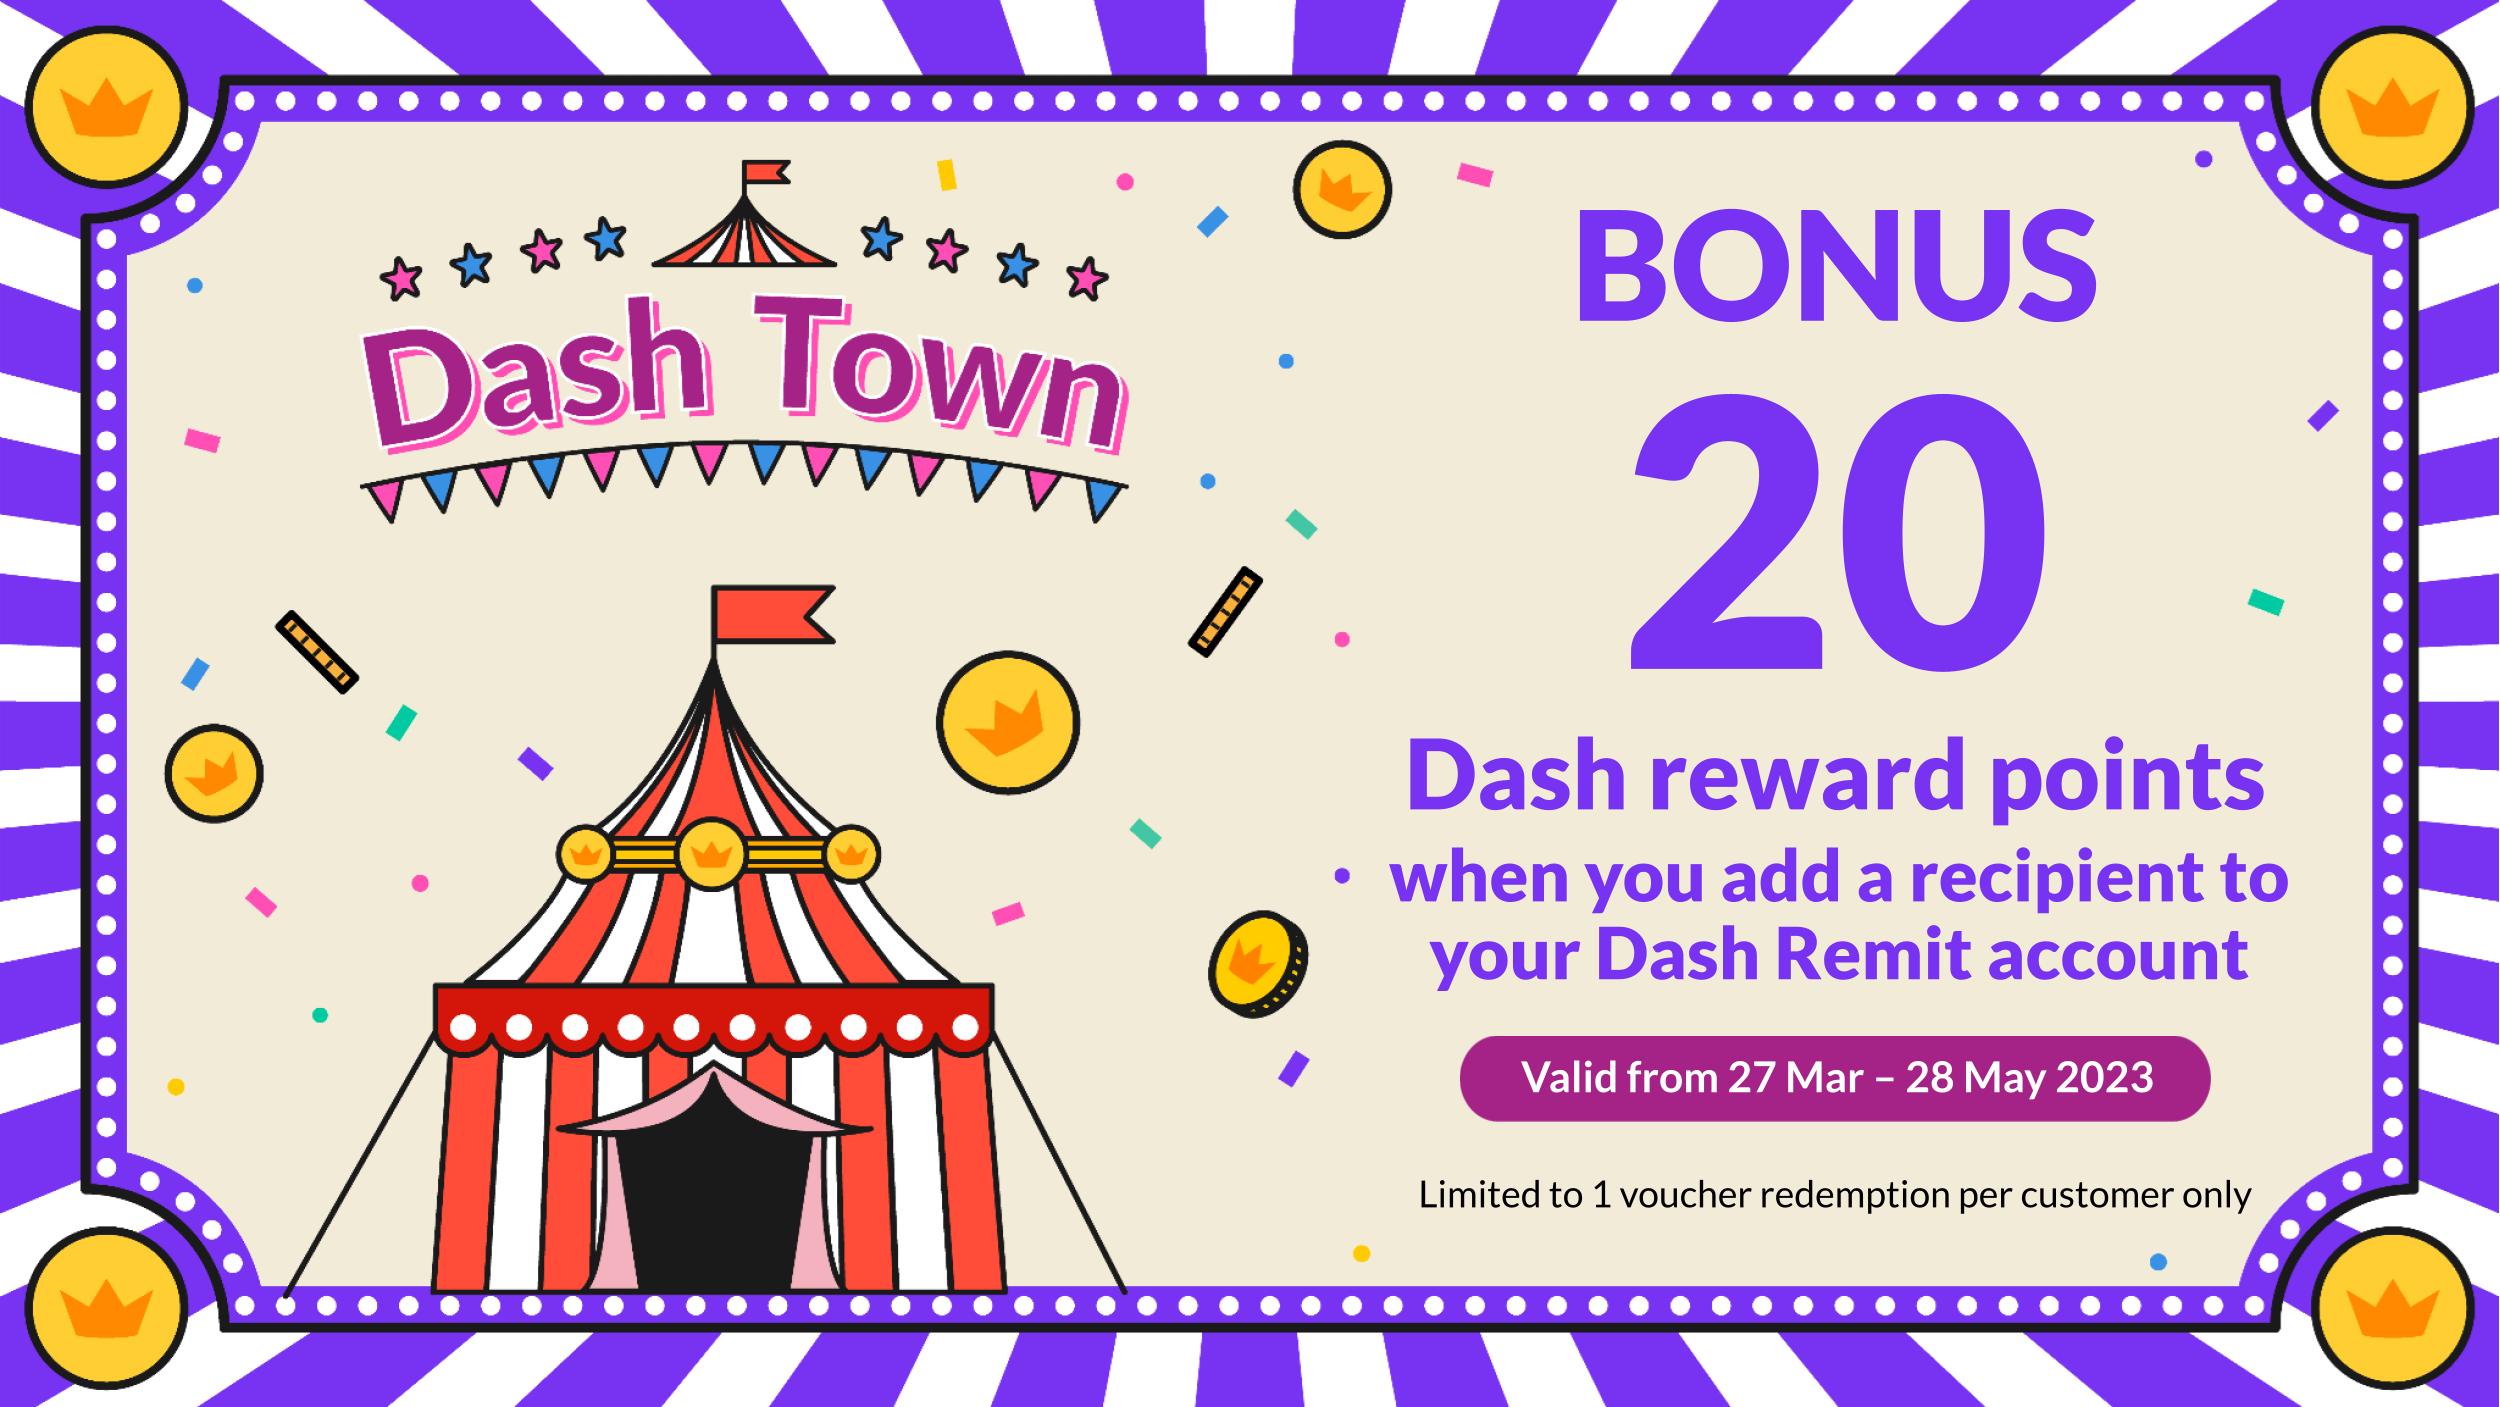 Dash Town Remit add beneficiary voucher 20 pts